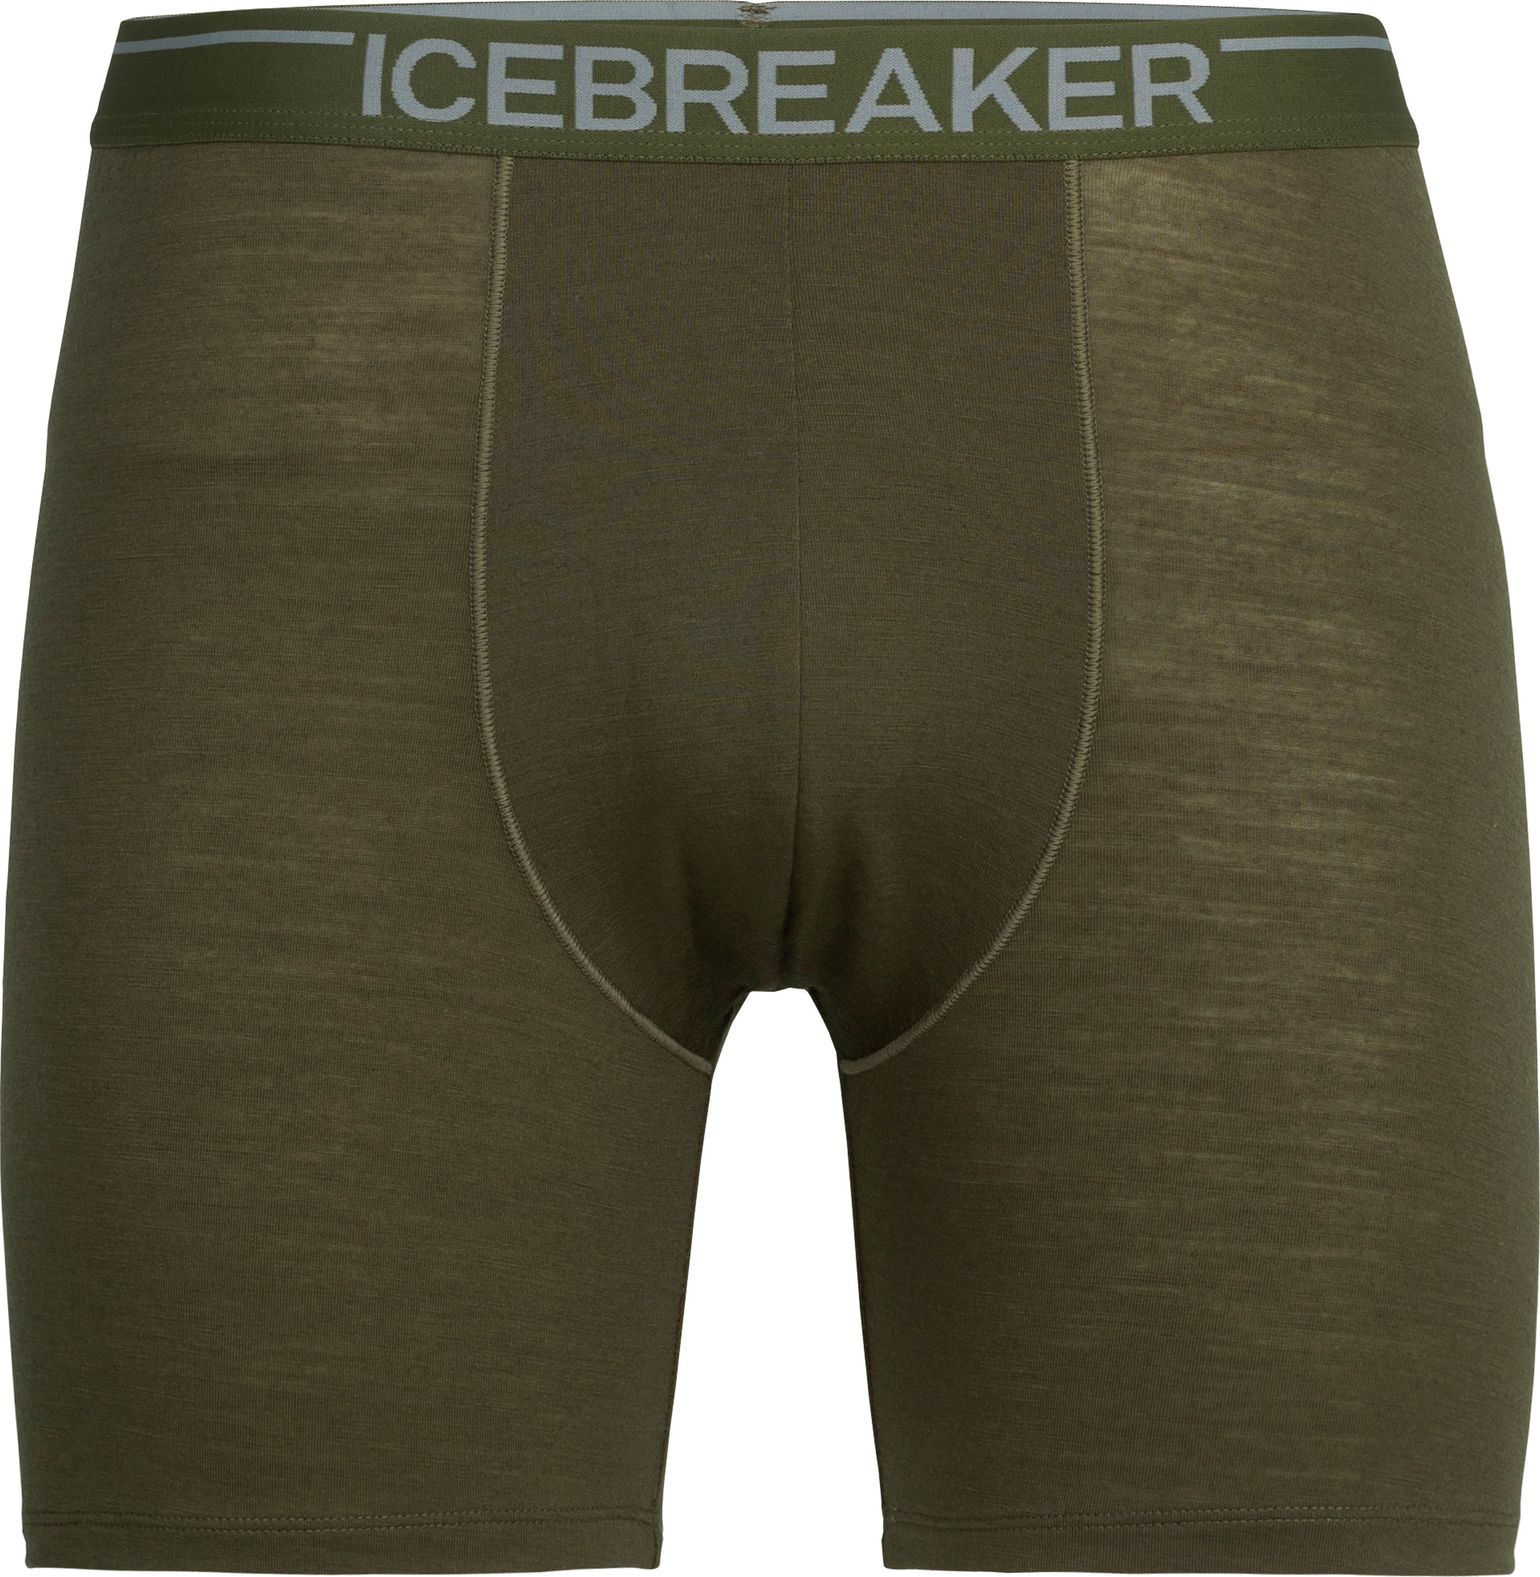 Icebreaker Men's Anatomica Long Boxers LODEN